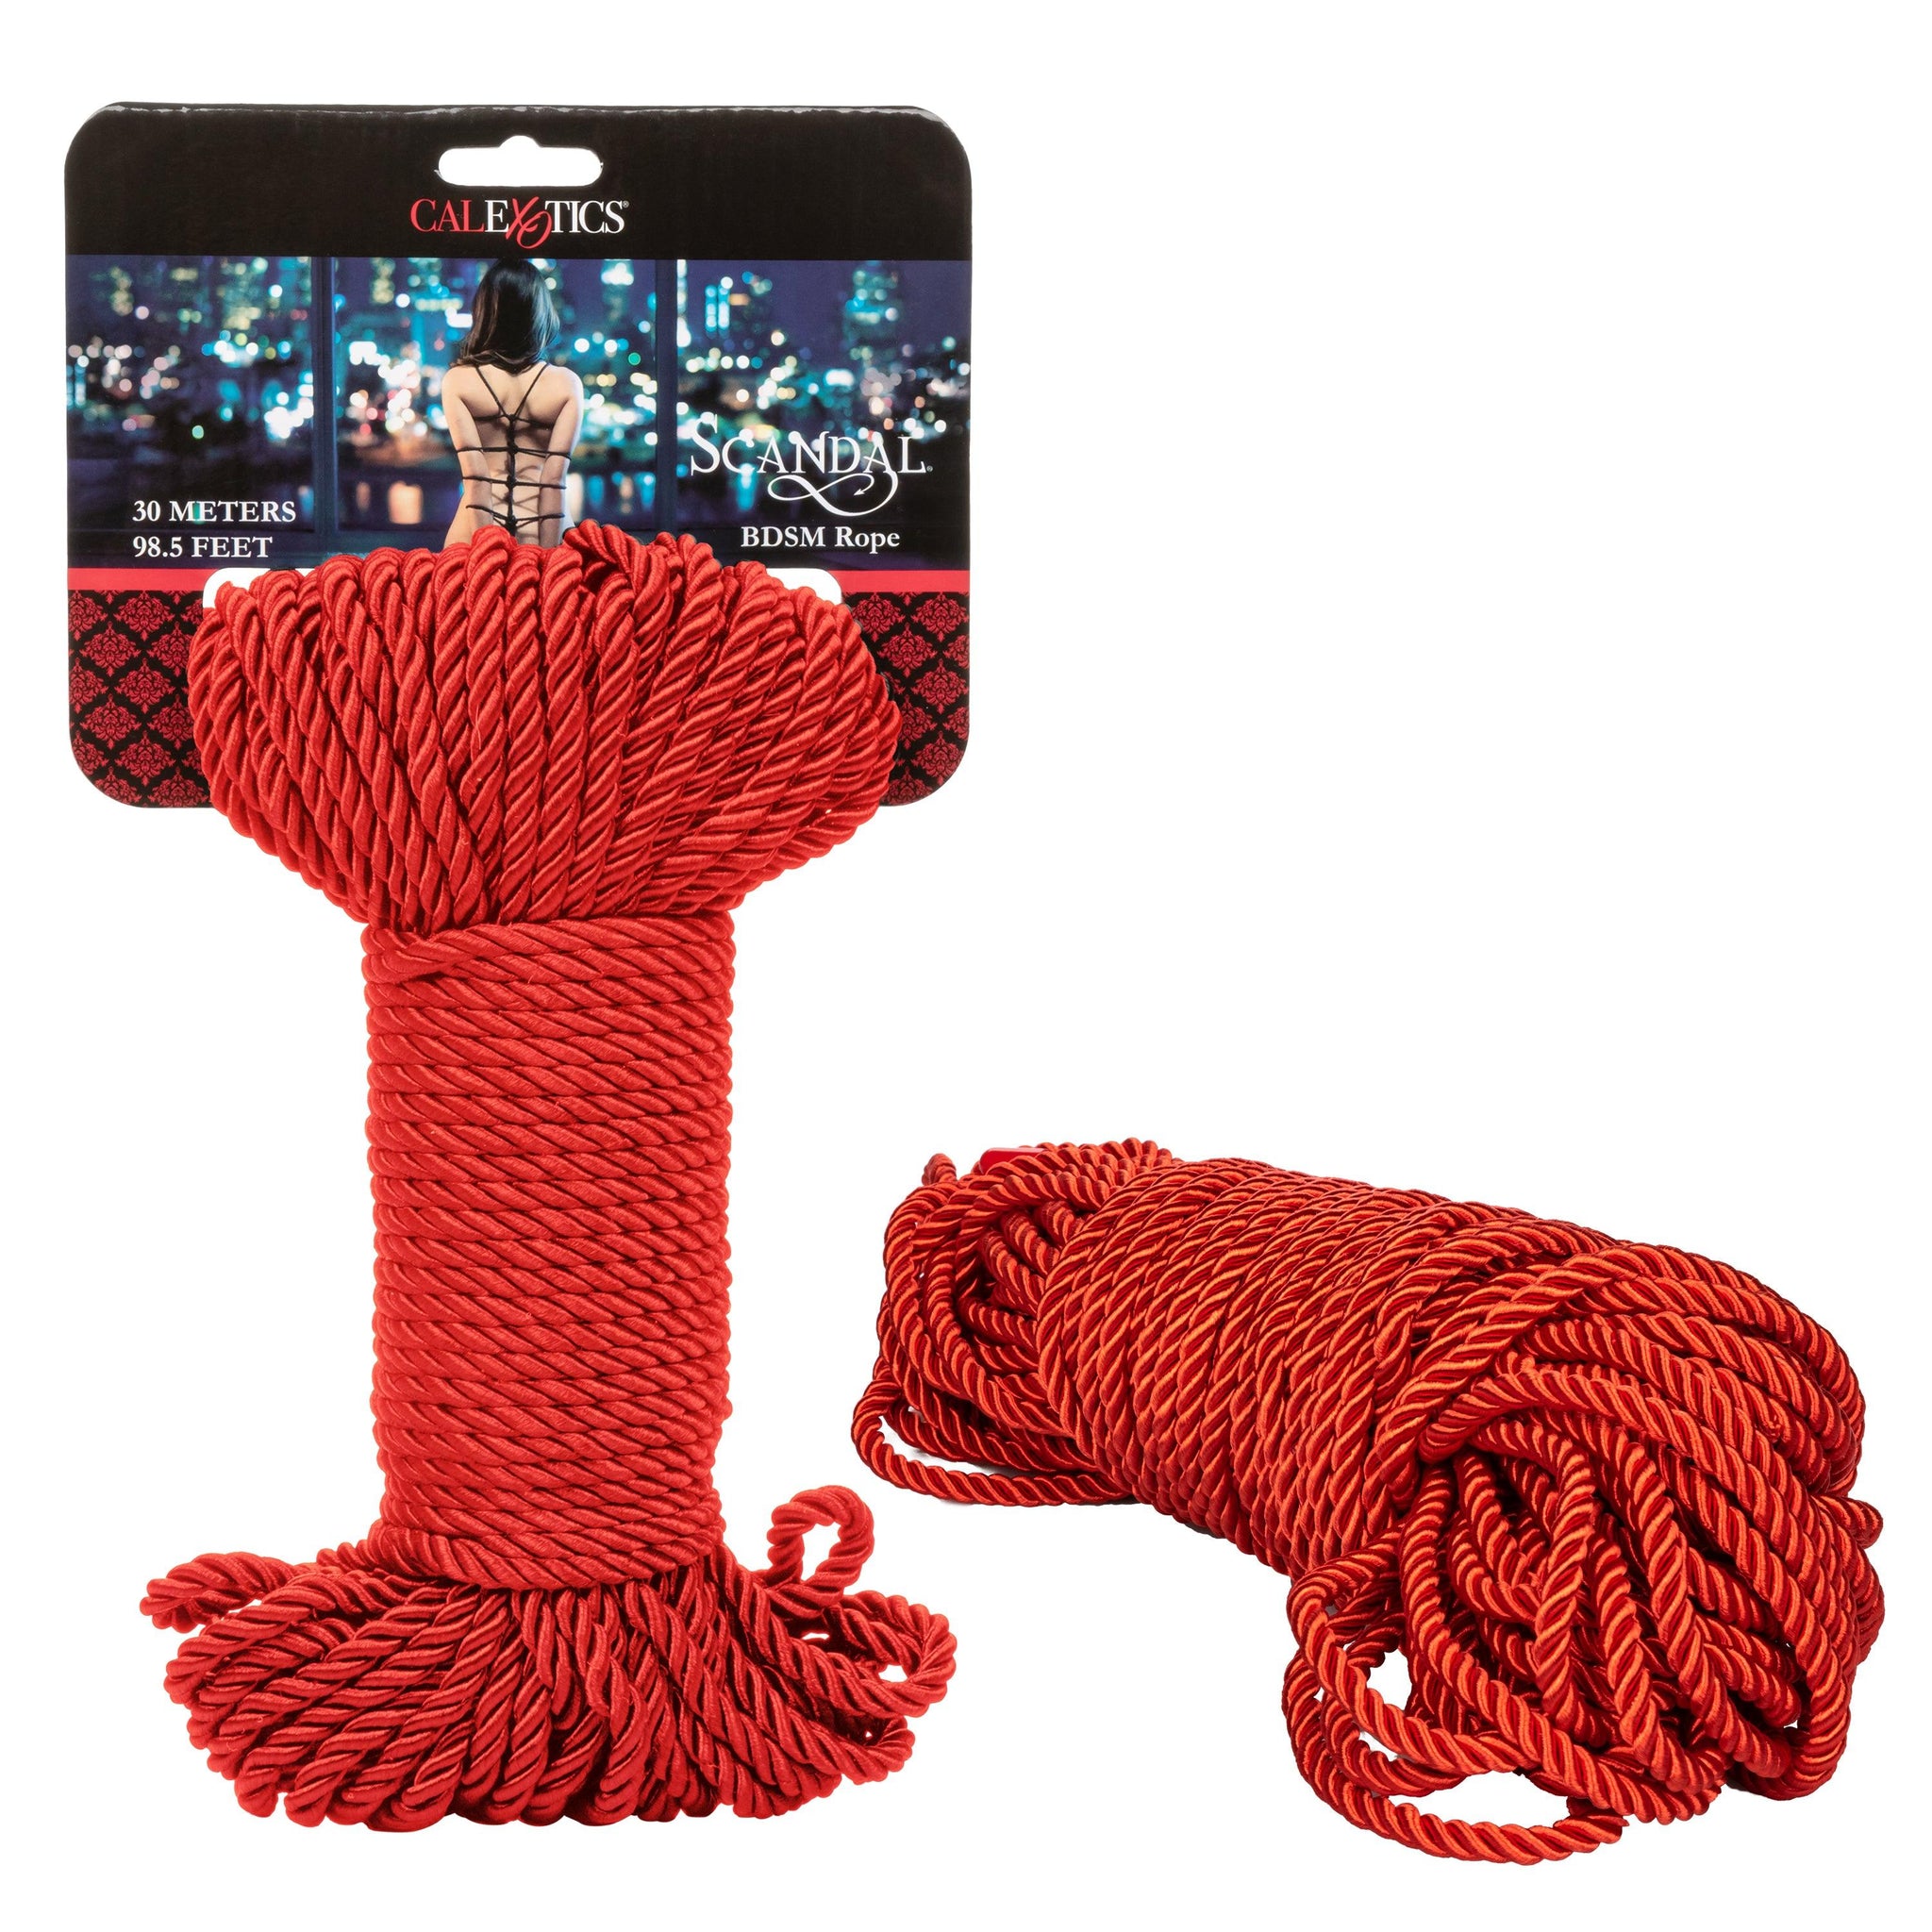 Scandal BDSM Rope 98.5ft/ 30m - Red -